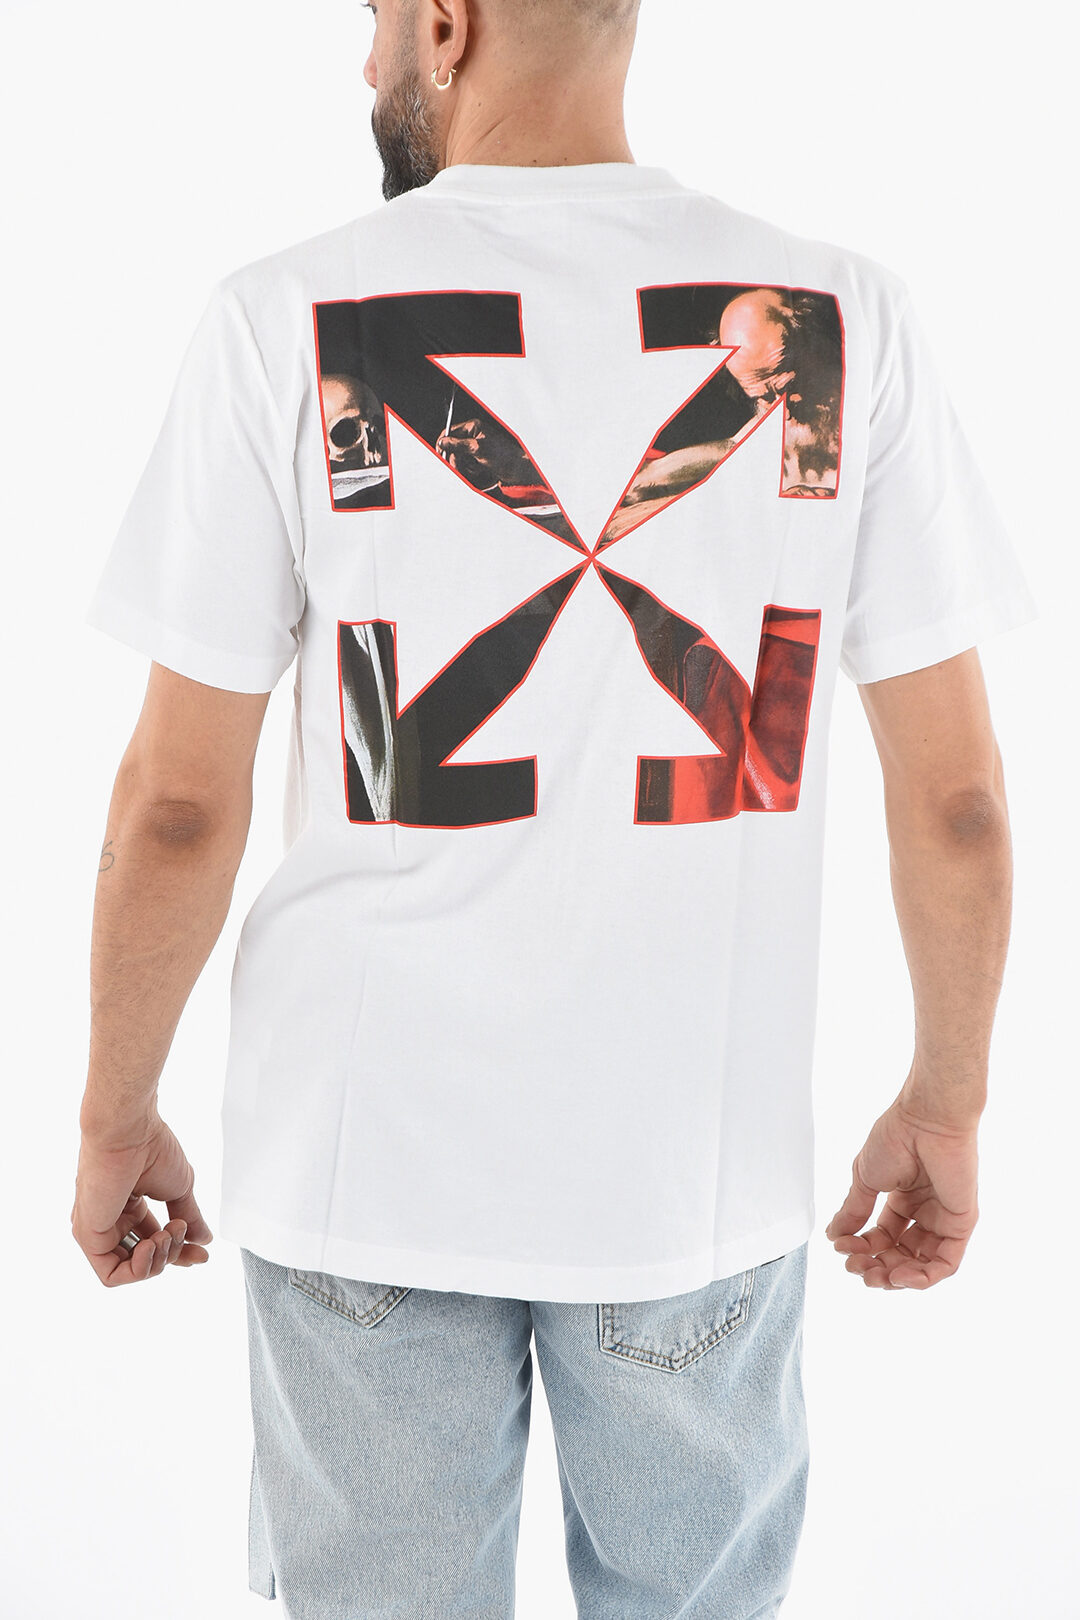 OFF-WHITE Caravaggio Arrow Slim Cotton T-Shirt for Men